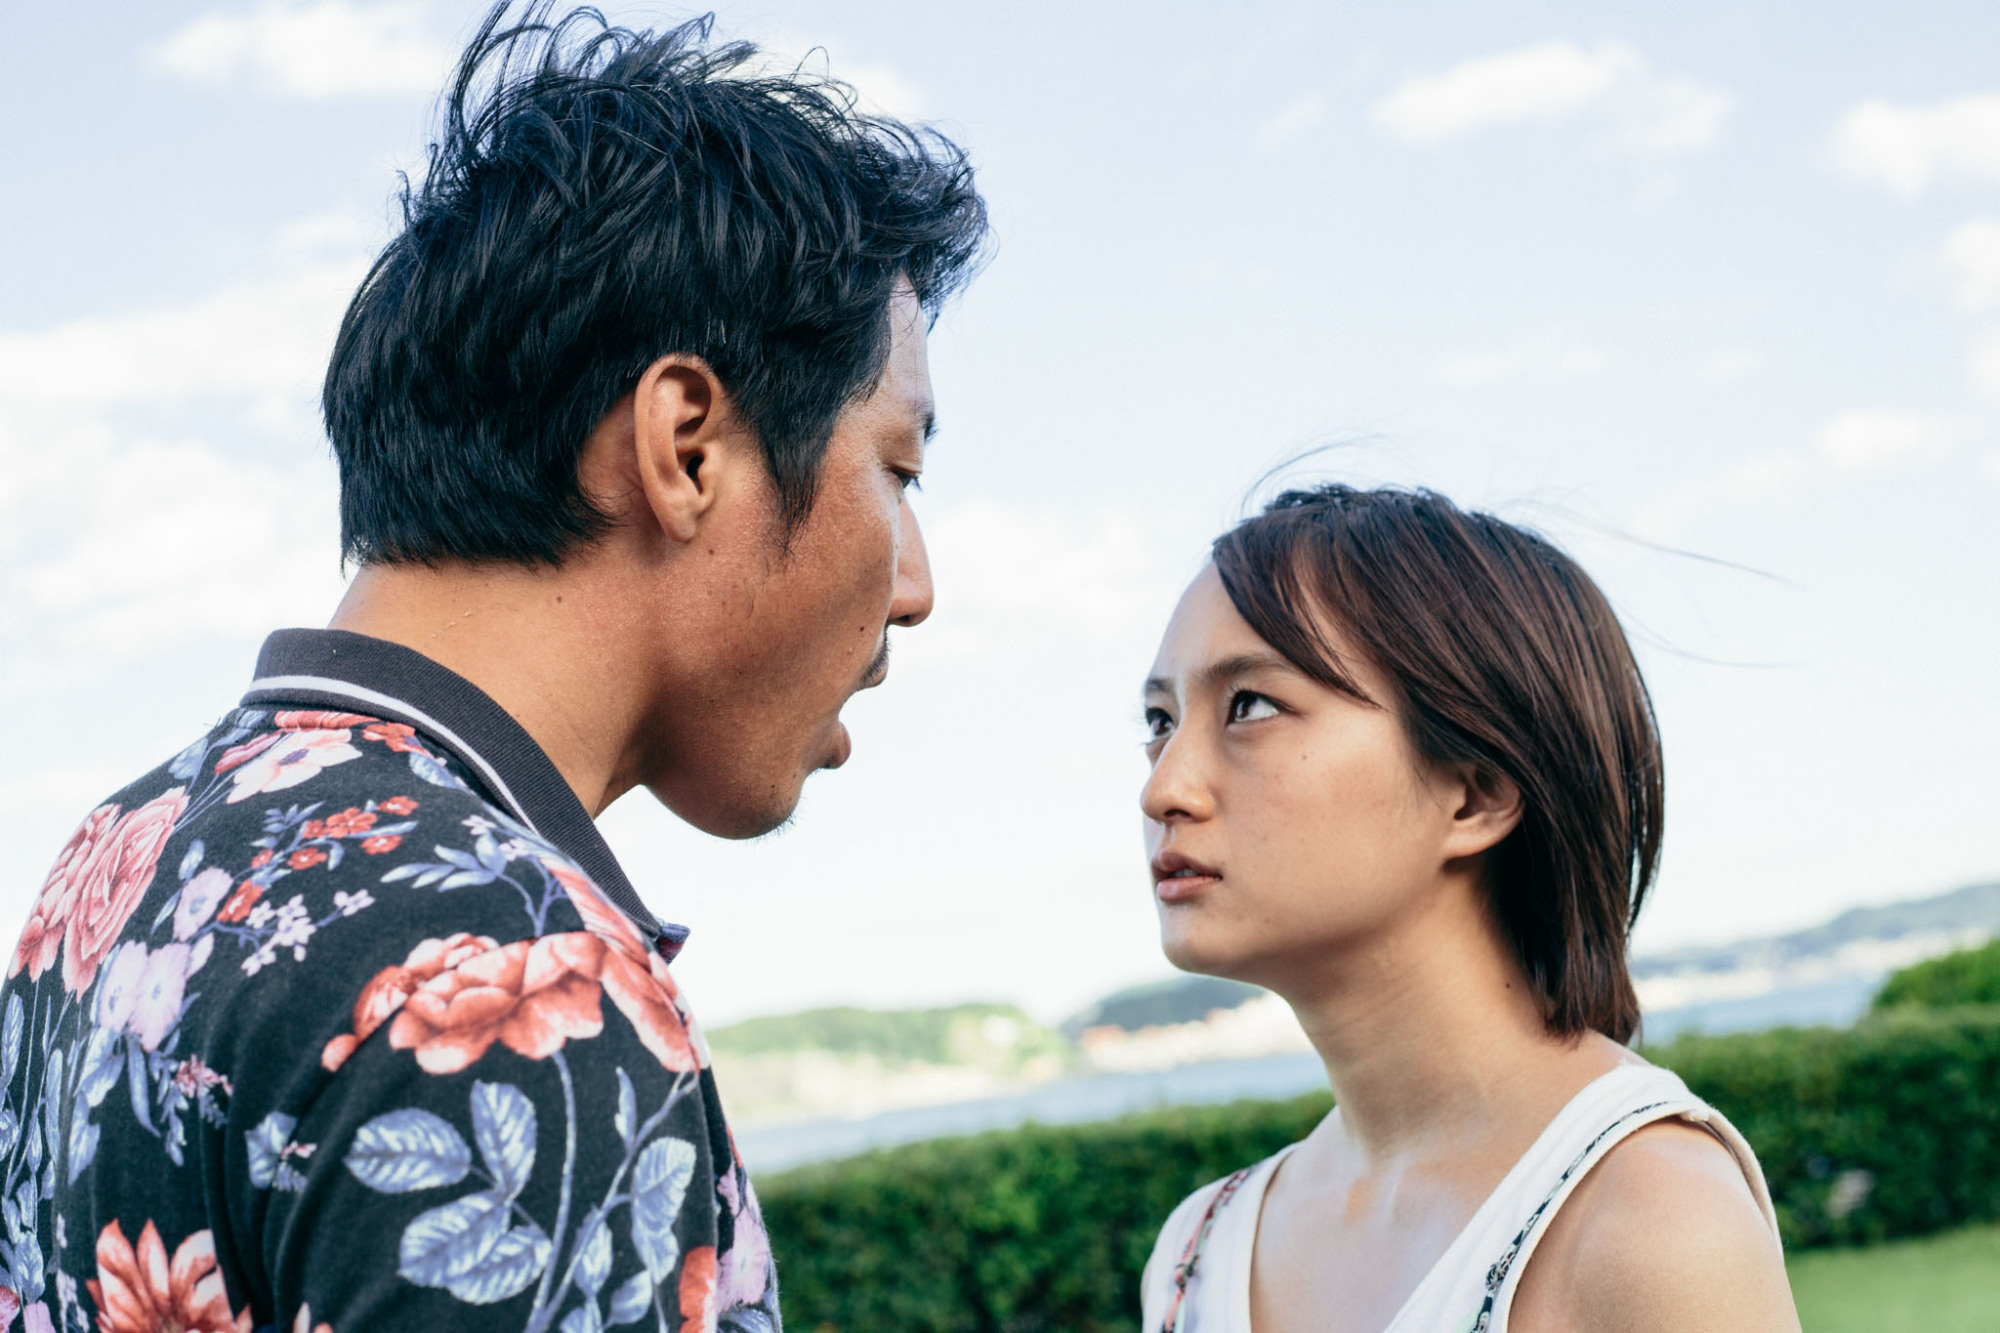 Xxx Jav Hd Rape - Minori, on the Brink': An unusual take on confrontation - The Japan Times